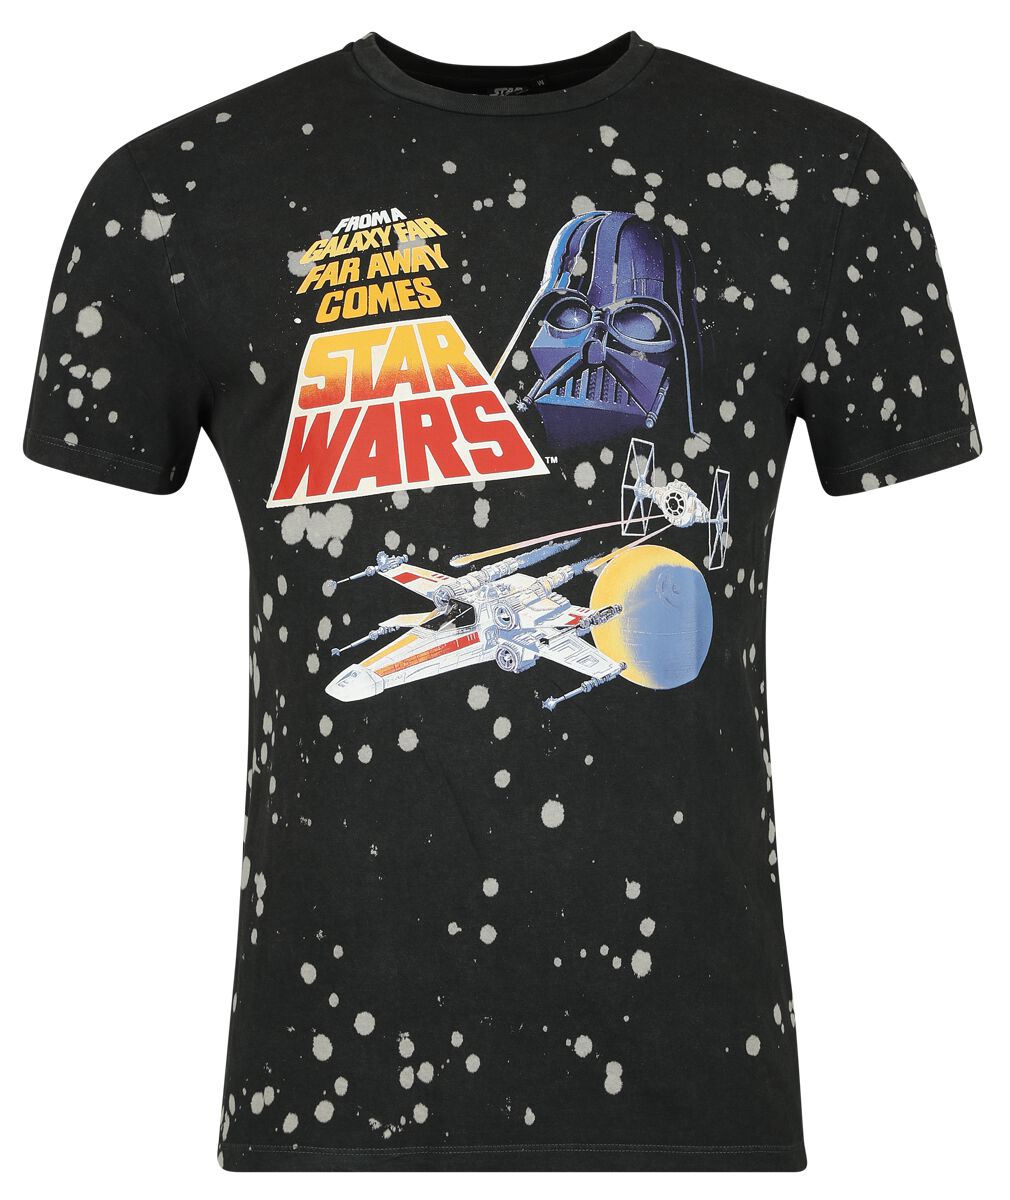 Star Wars Classic - Space T-Shirt schwarz in S